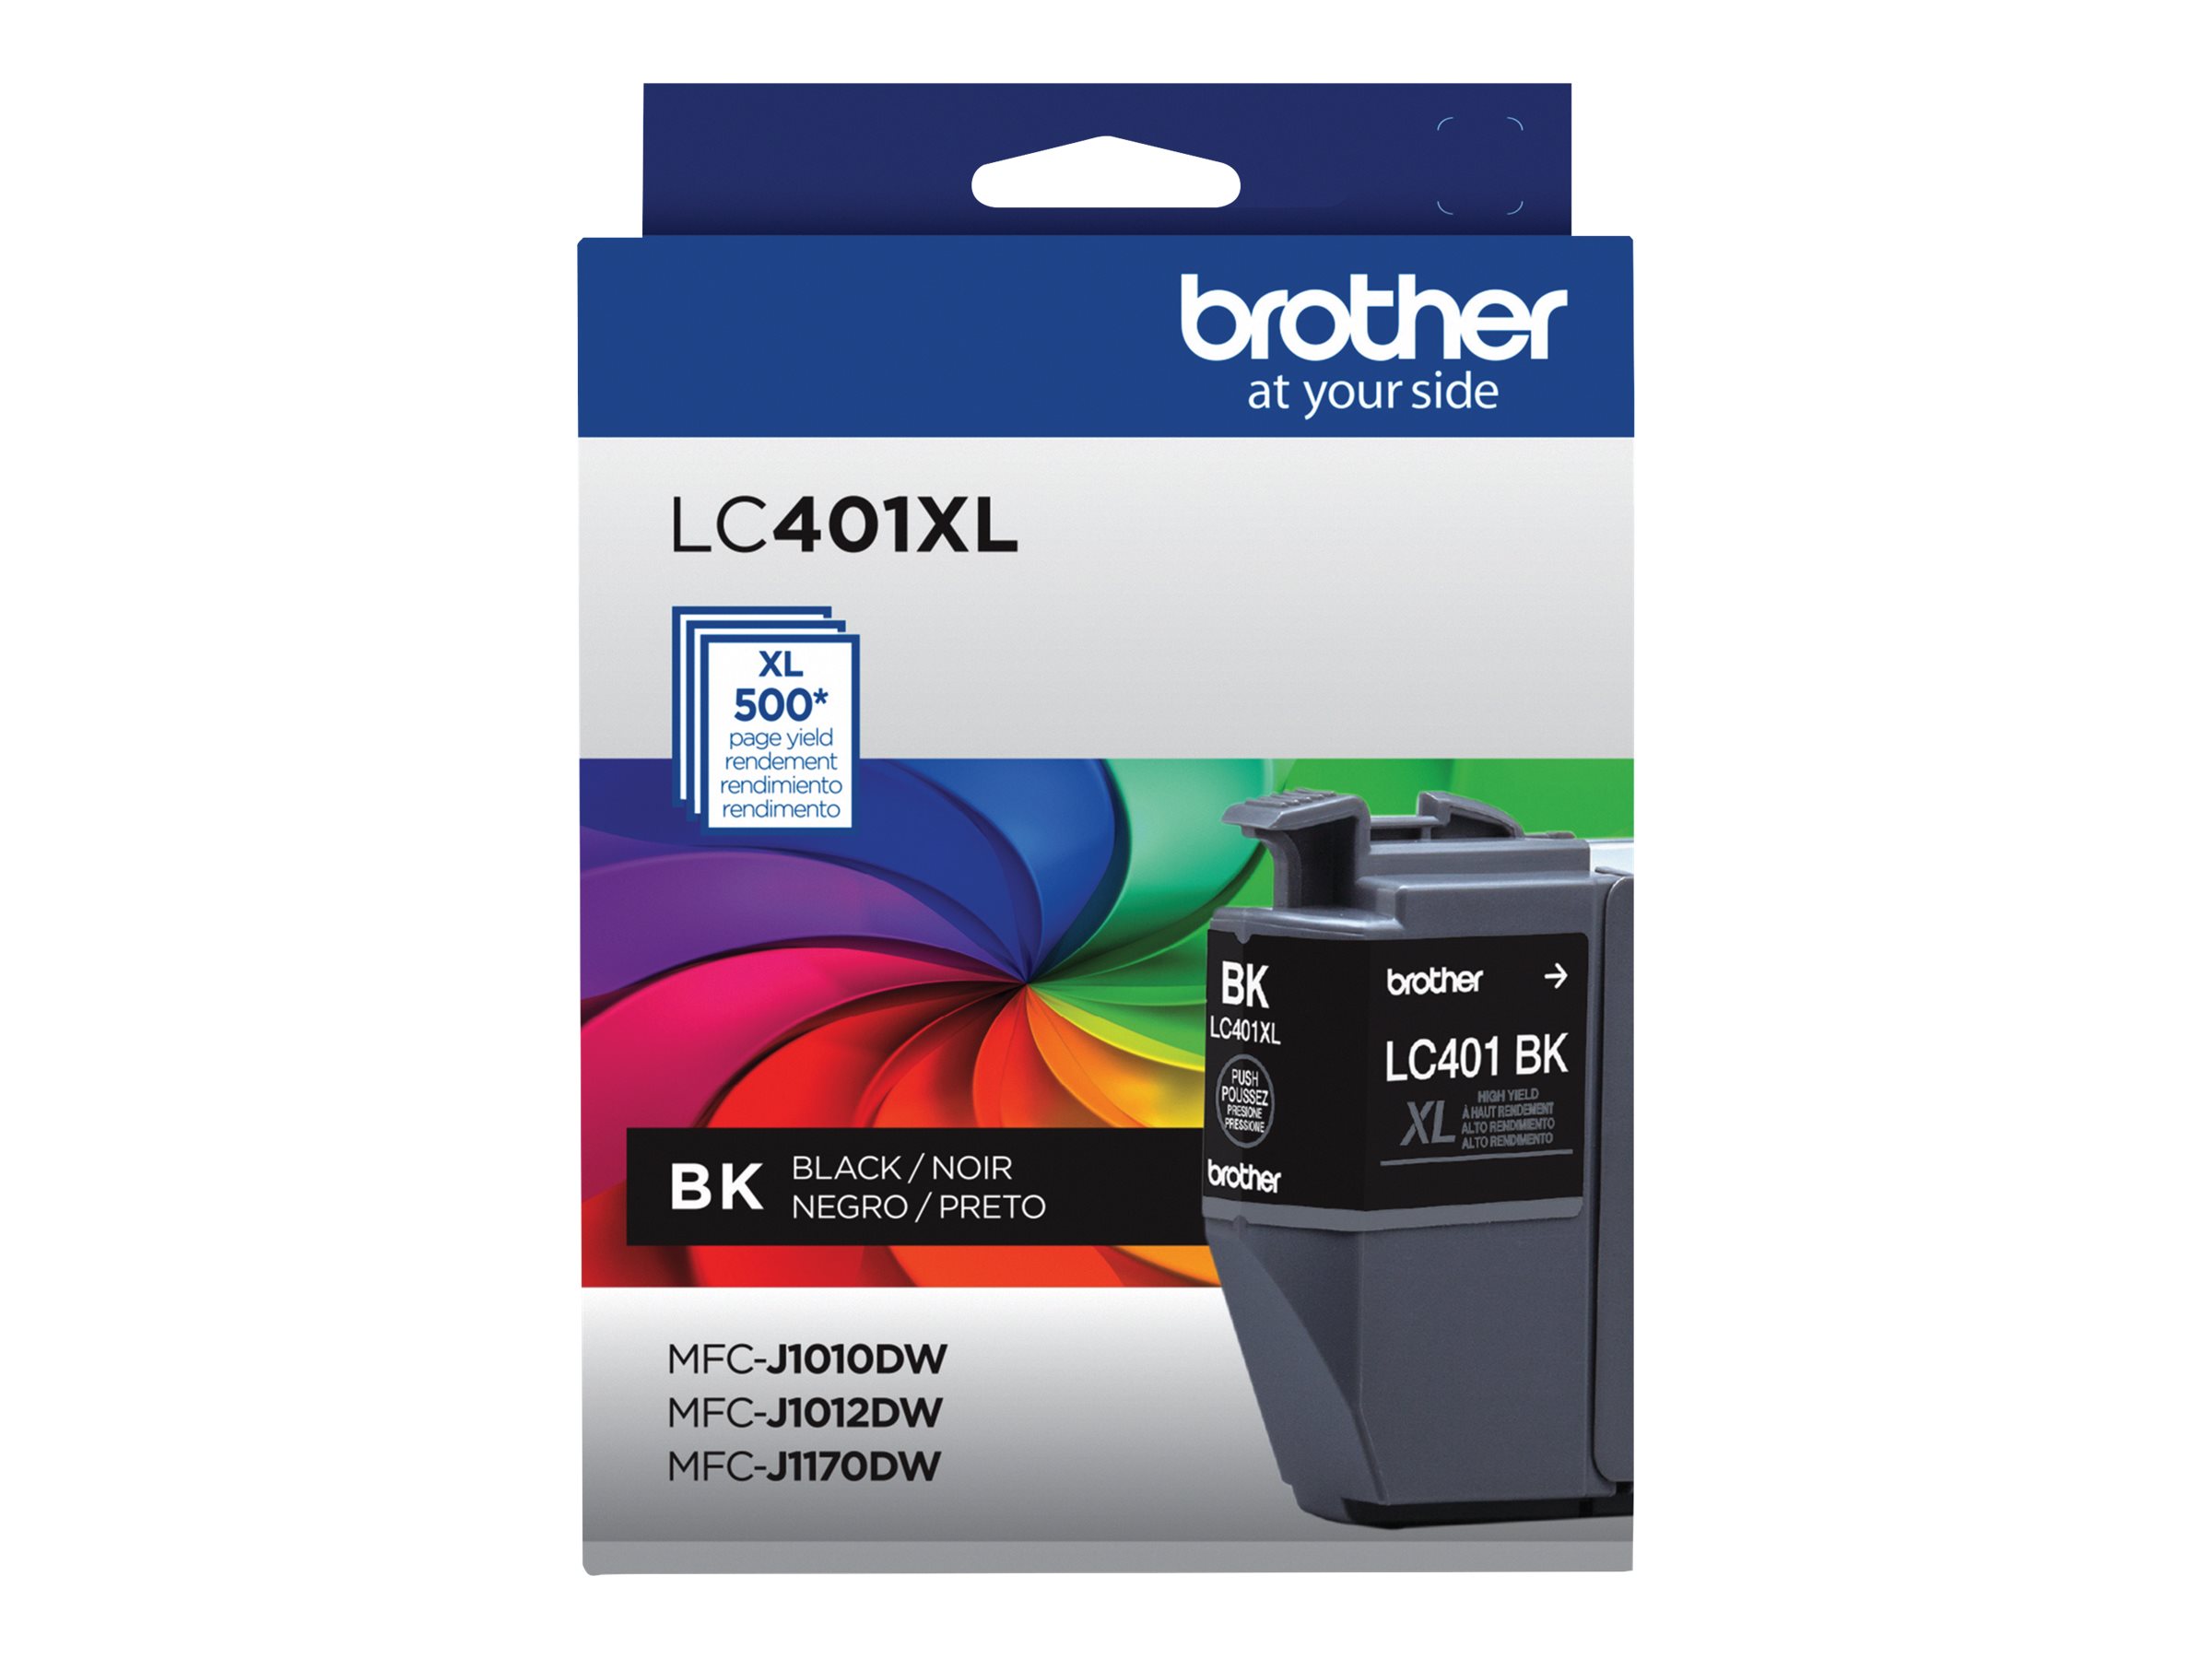 Chip resetter for Brother MFC-J1010DW printer inks